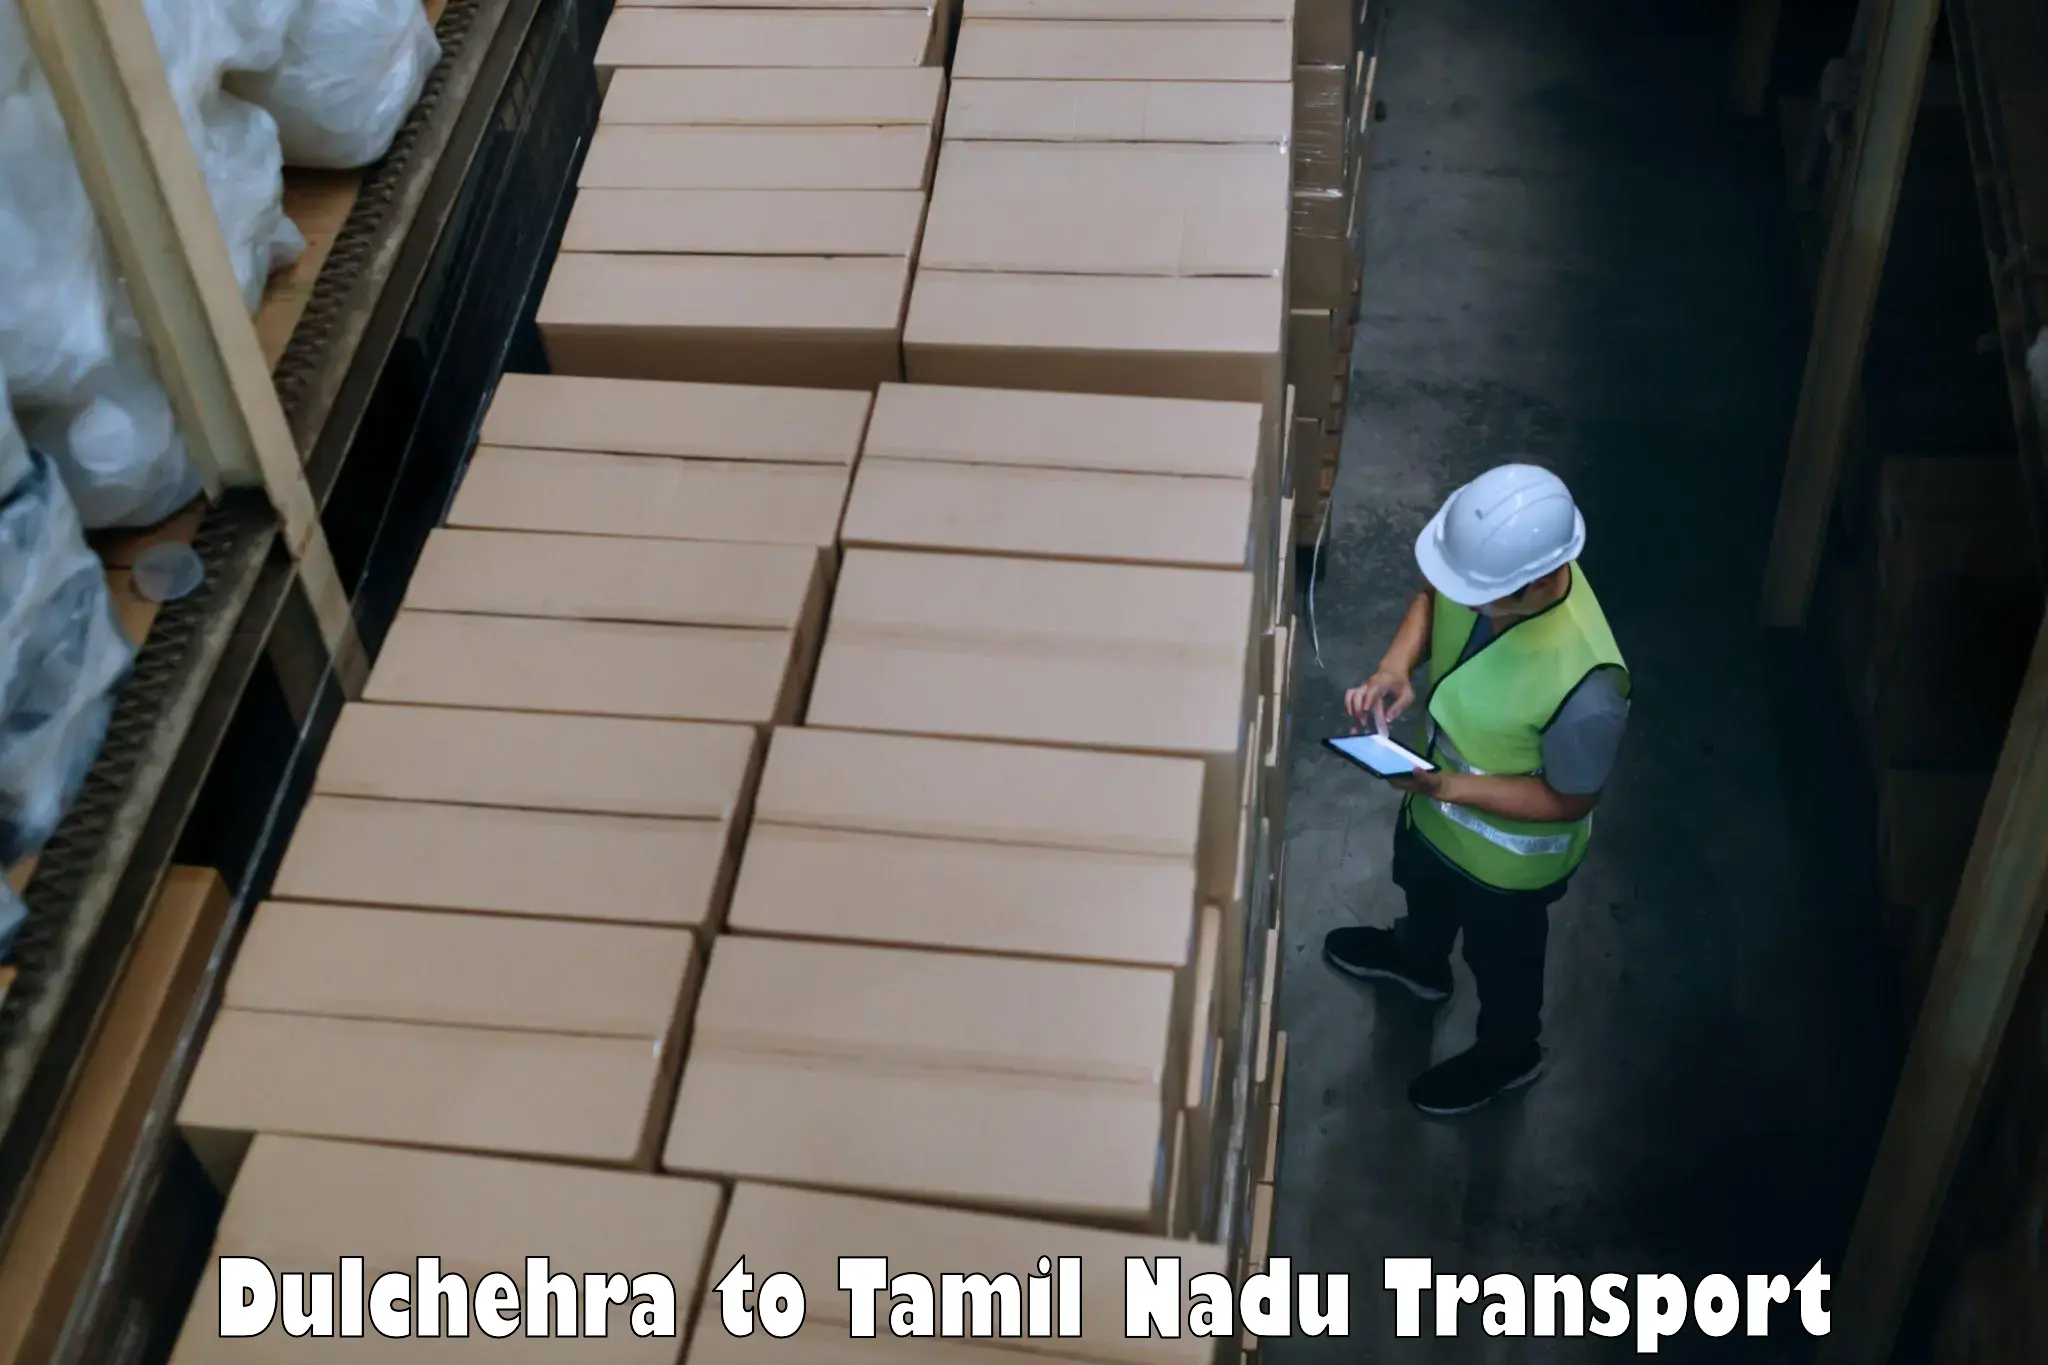 Truck transport companies in India Dulchehra to Thanjavur